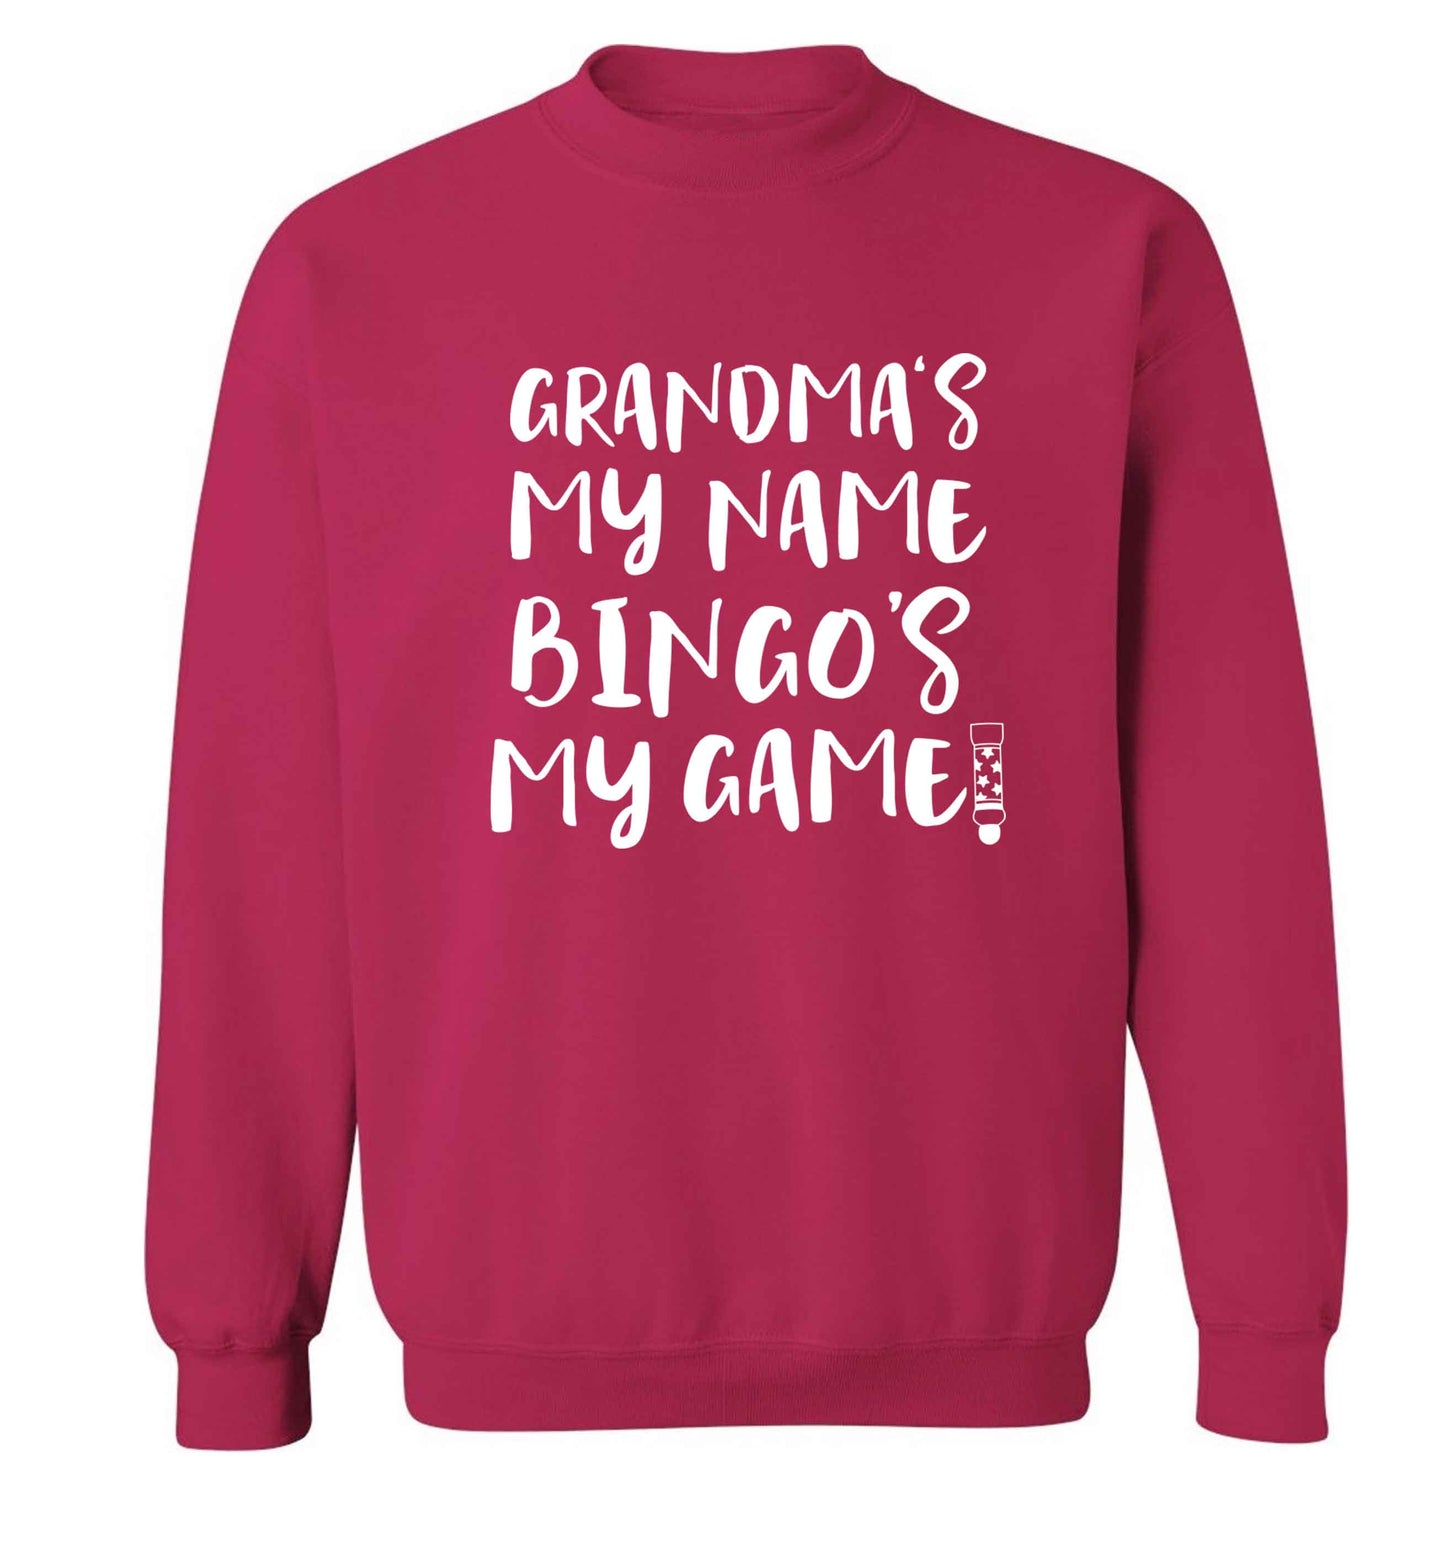 Grandma's my name bingo's my game! Adult's unisex pink Sweater 2XL